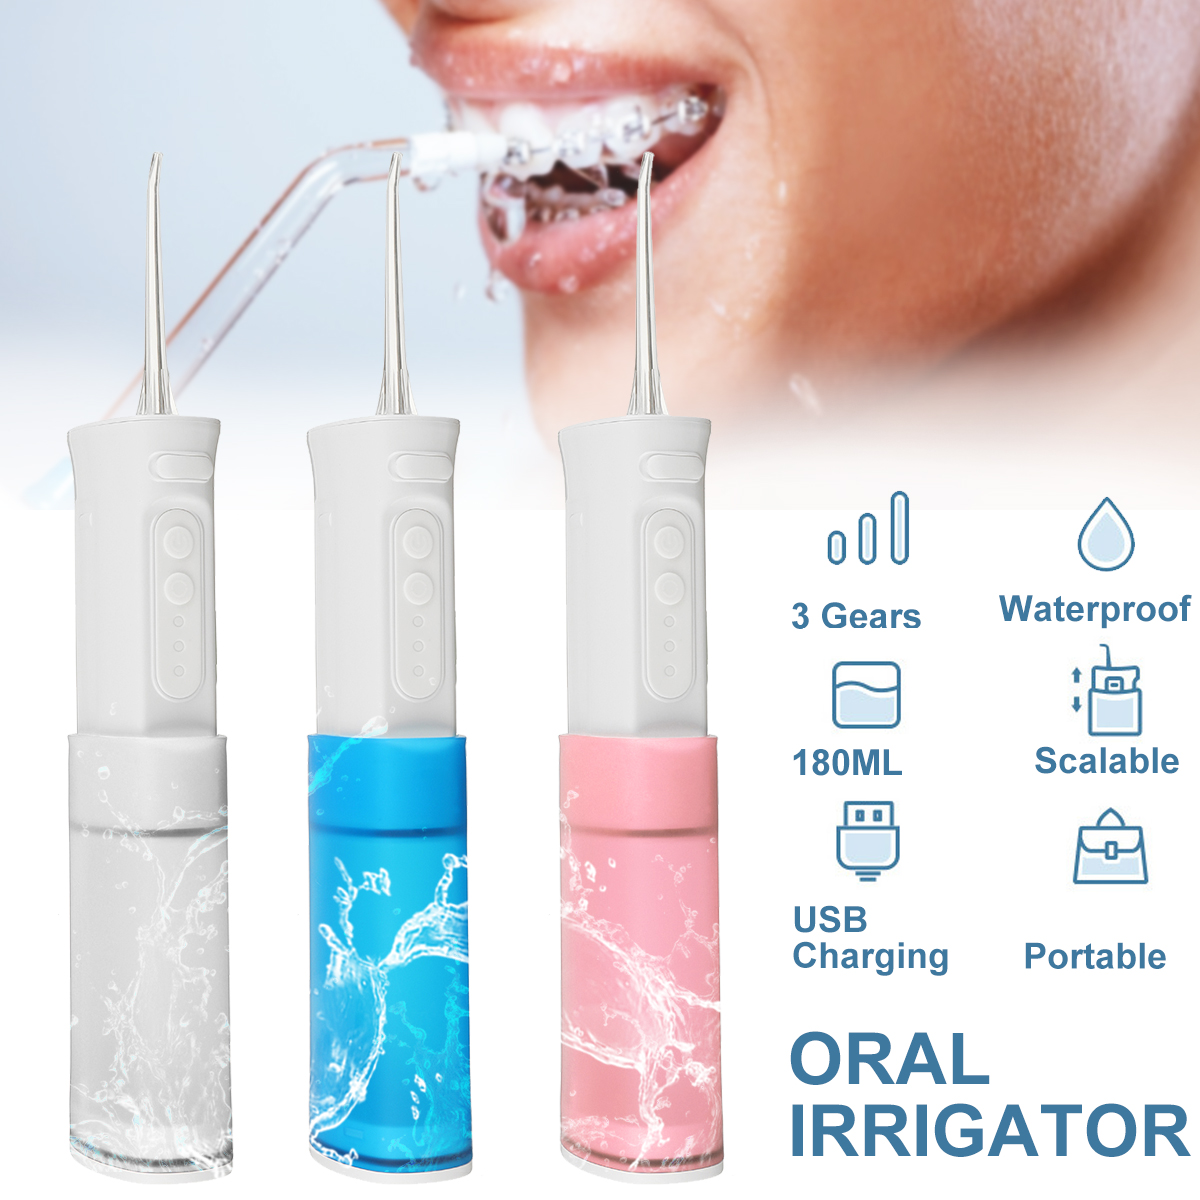 Three-speed-Adjustment-Oral-Irrigator-Portable-Scalavle-Waterproof-Eletric-Teeth-Flusher-Dental-Scal-1853231-1